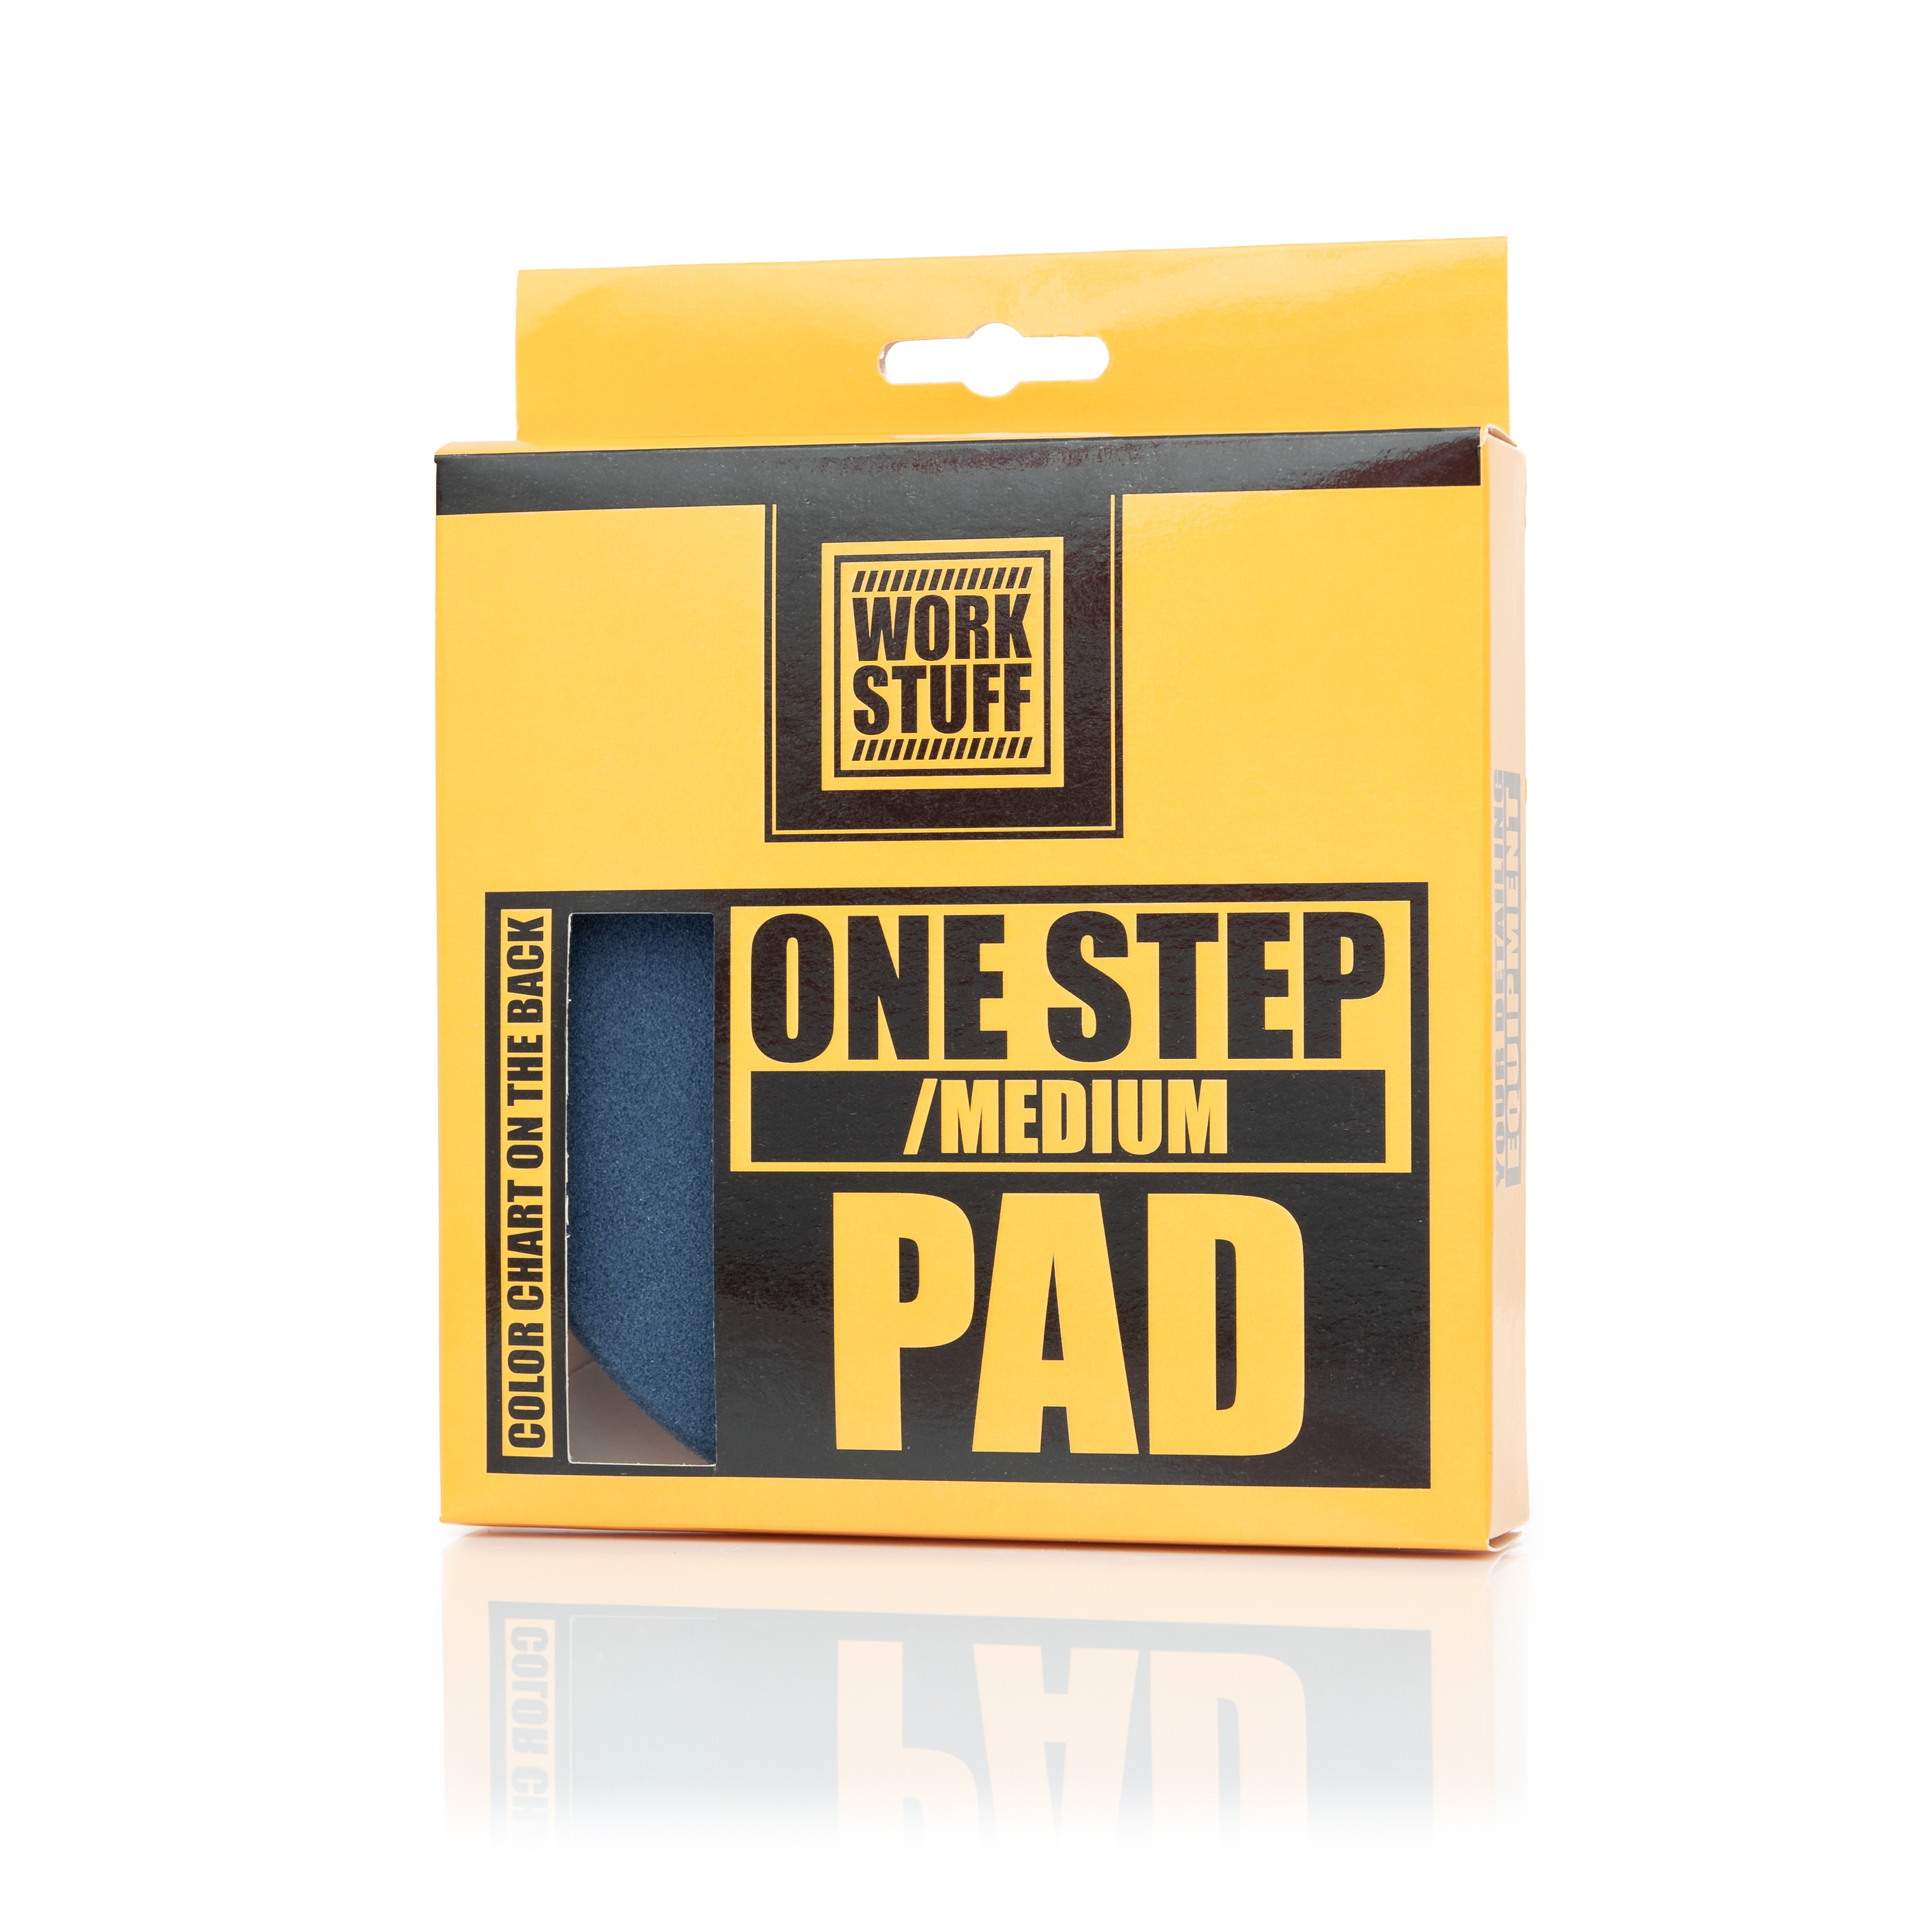 One Step PAD Medium abrasive polishing pad.